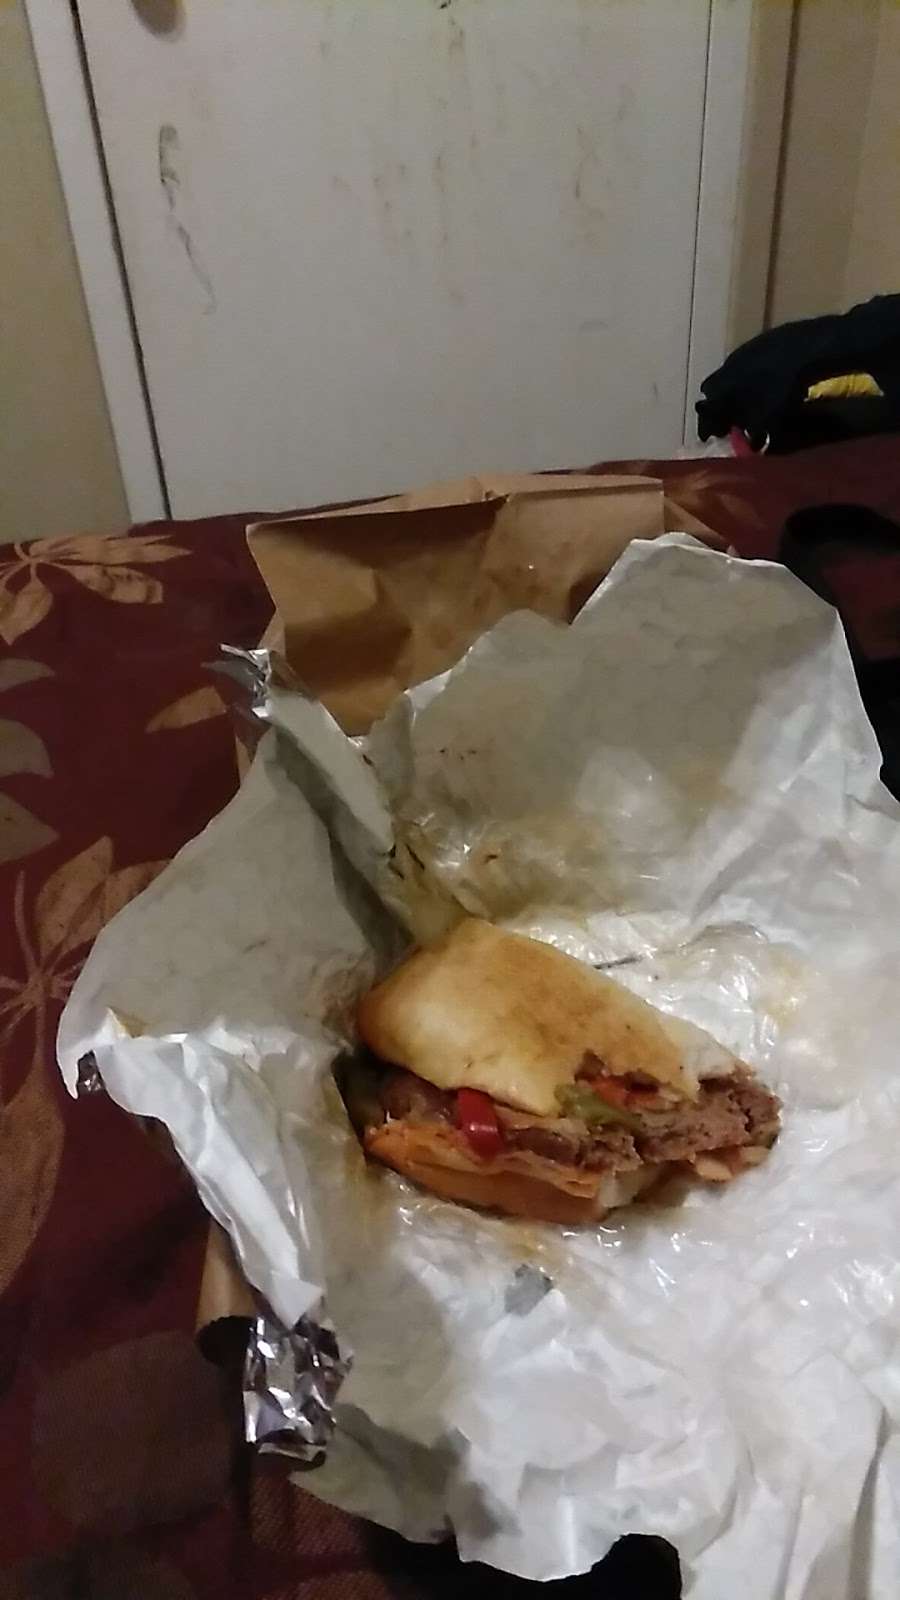 Pudgys Pizza & Sandwiches | 13460 S Baltimore Ave, Chicago, IL 60633, USA | Phone: (773) 646-4199